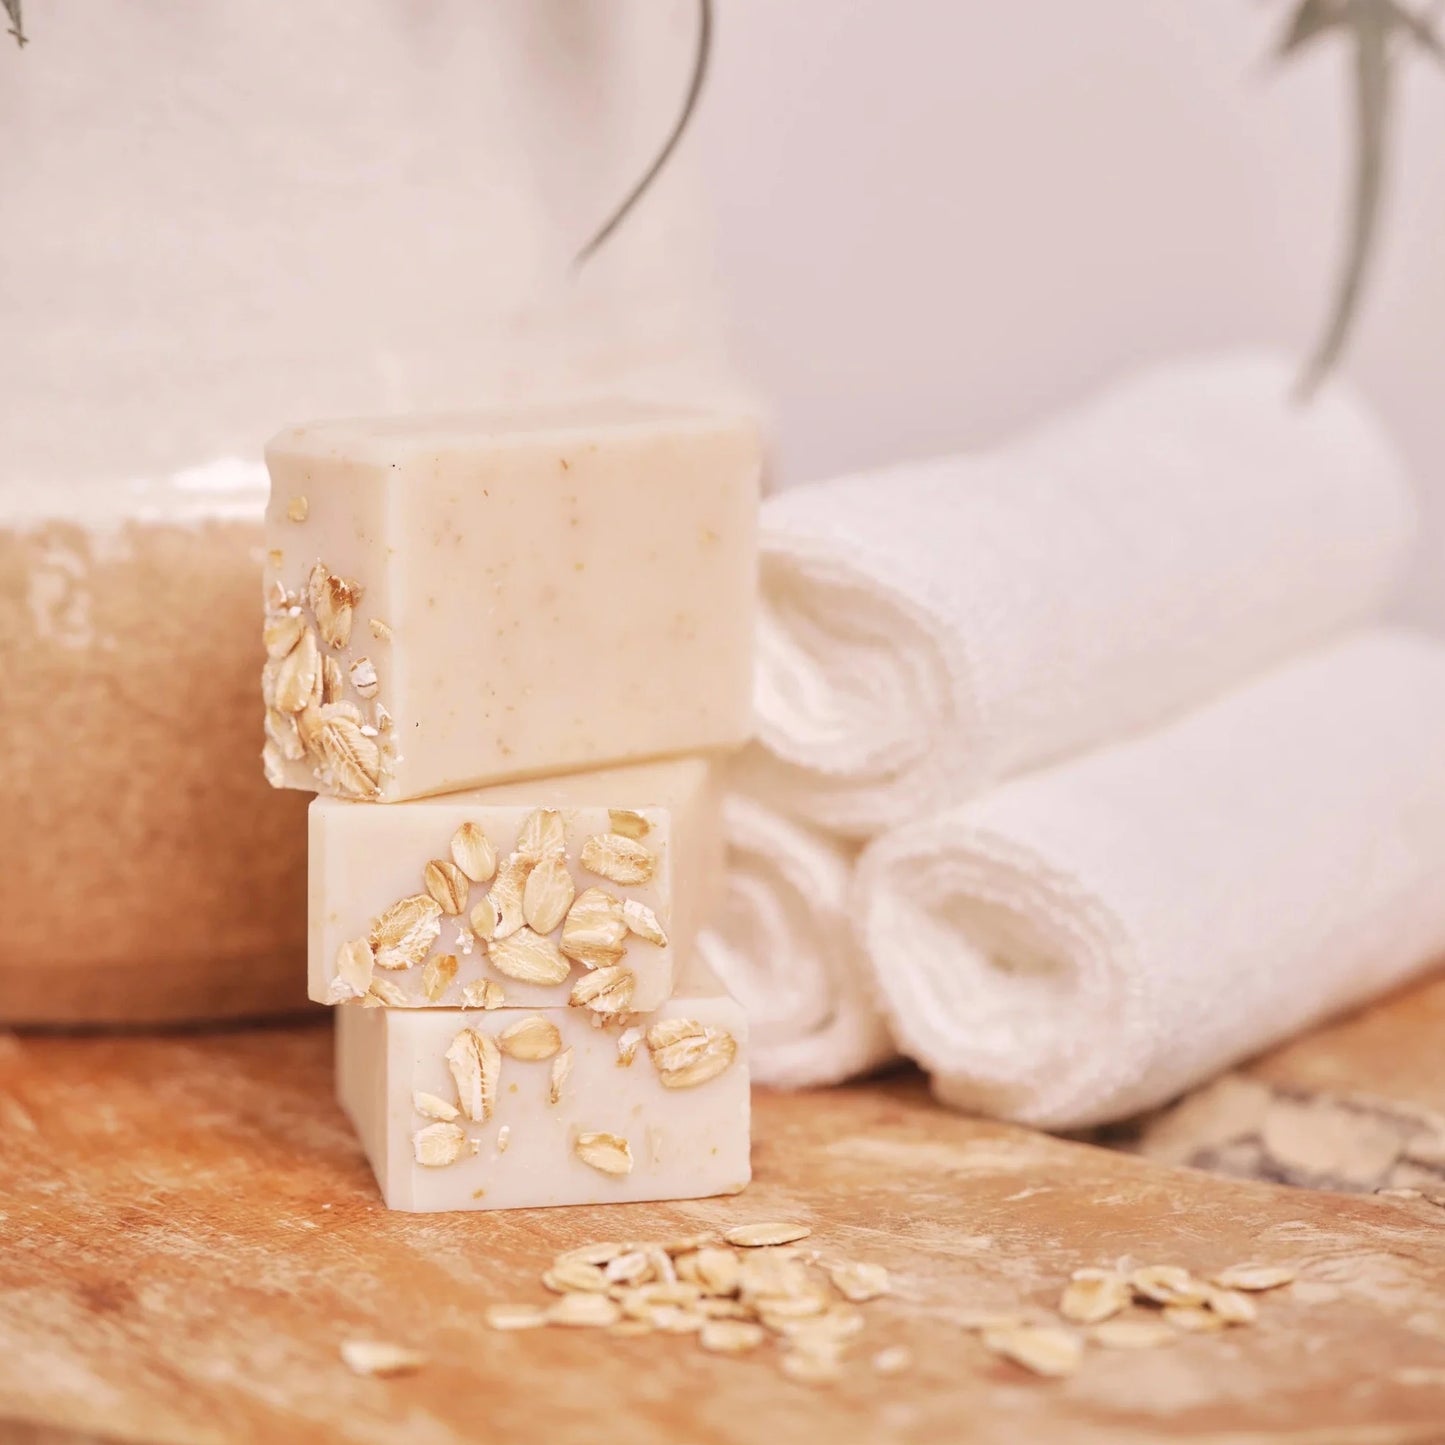 London Rose Organic Colloidal Oats Baby Soap